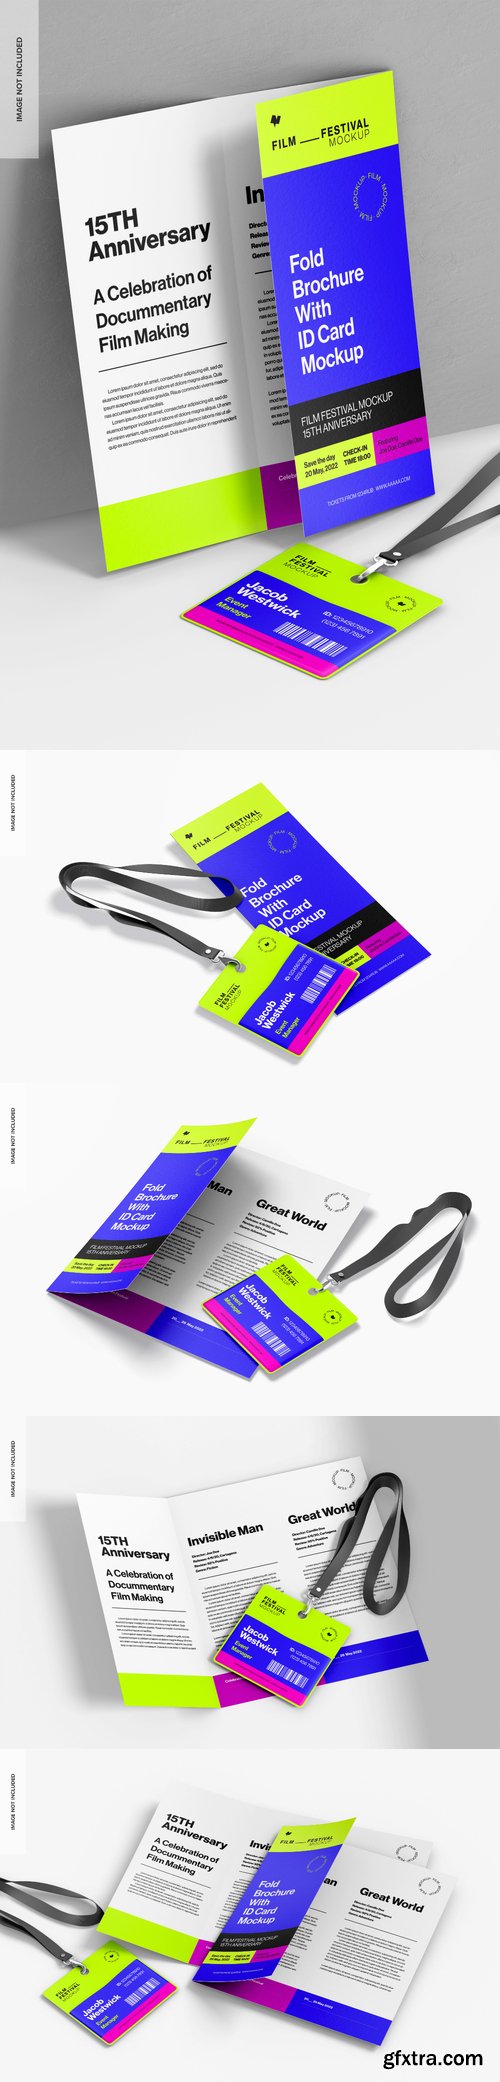 Fold brochure with id card mockup